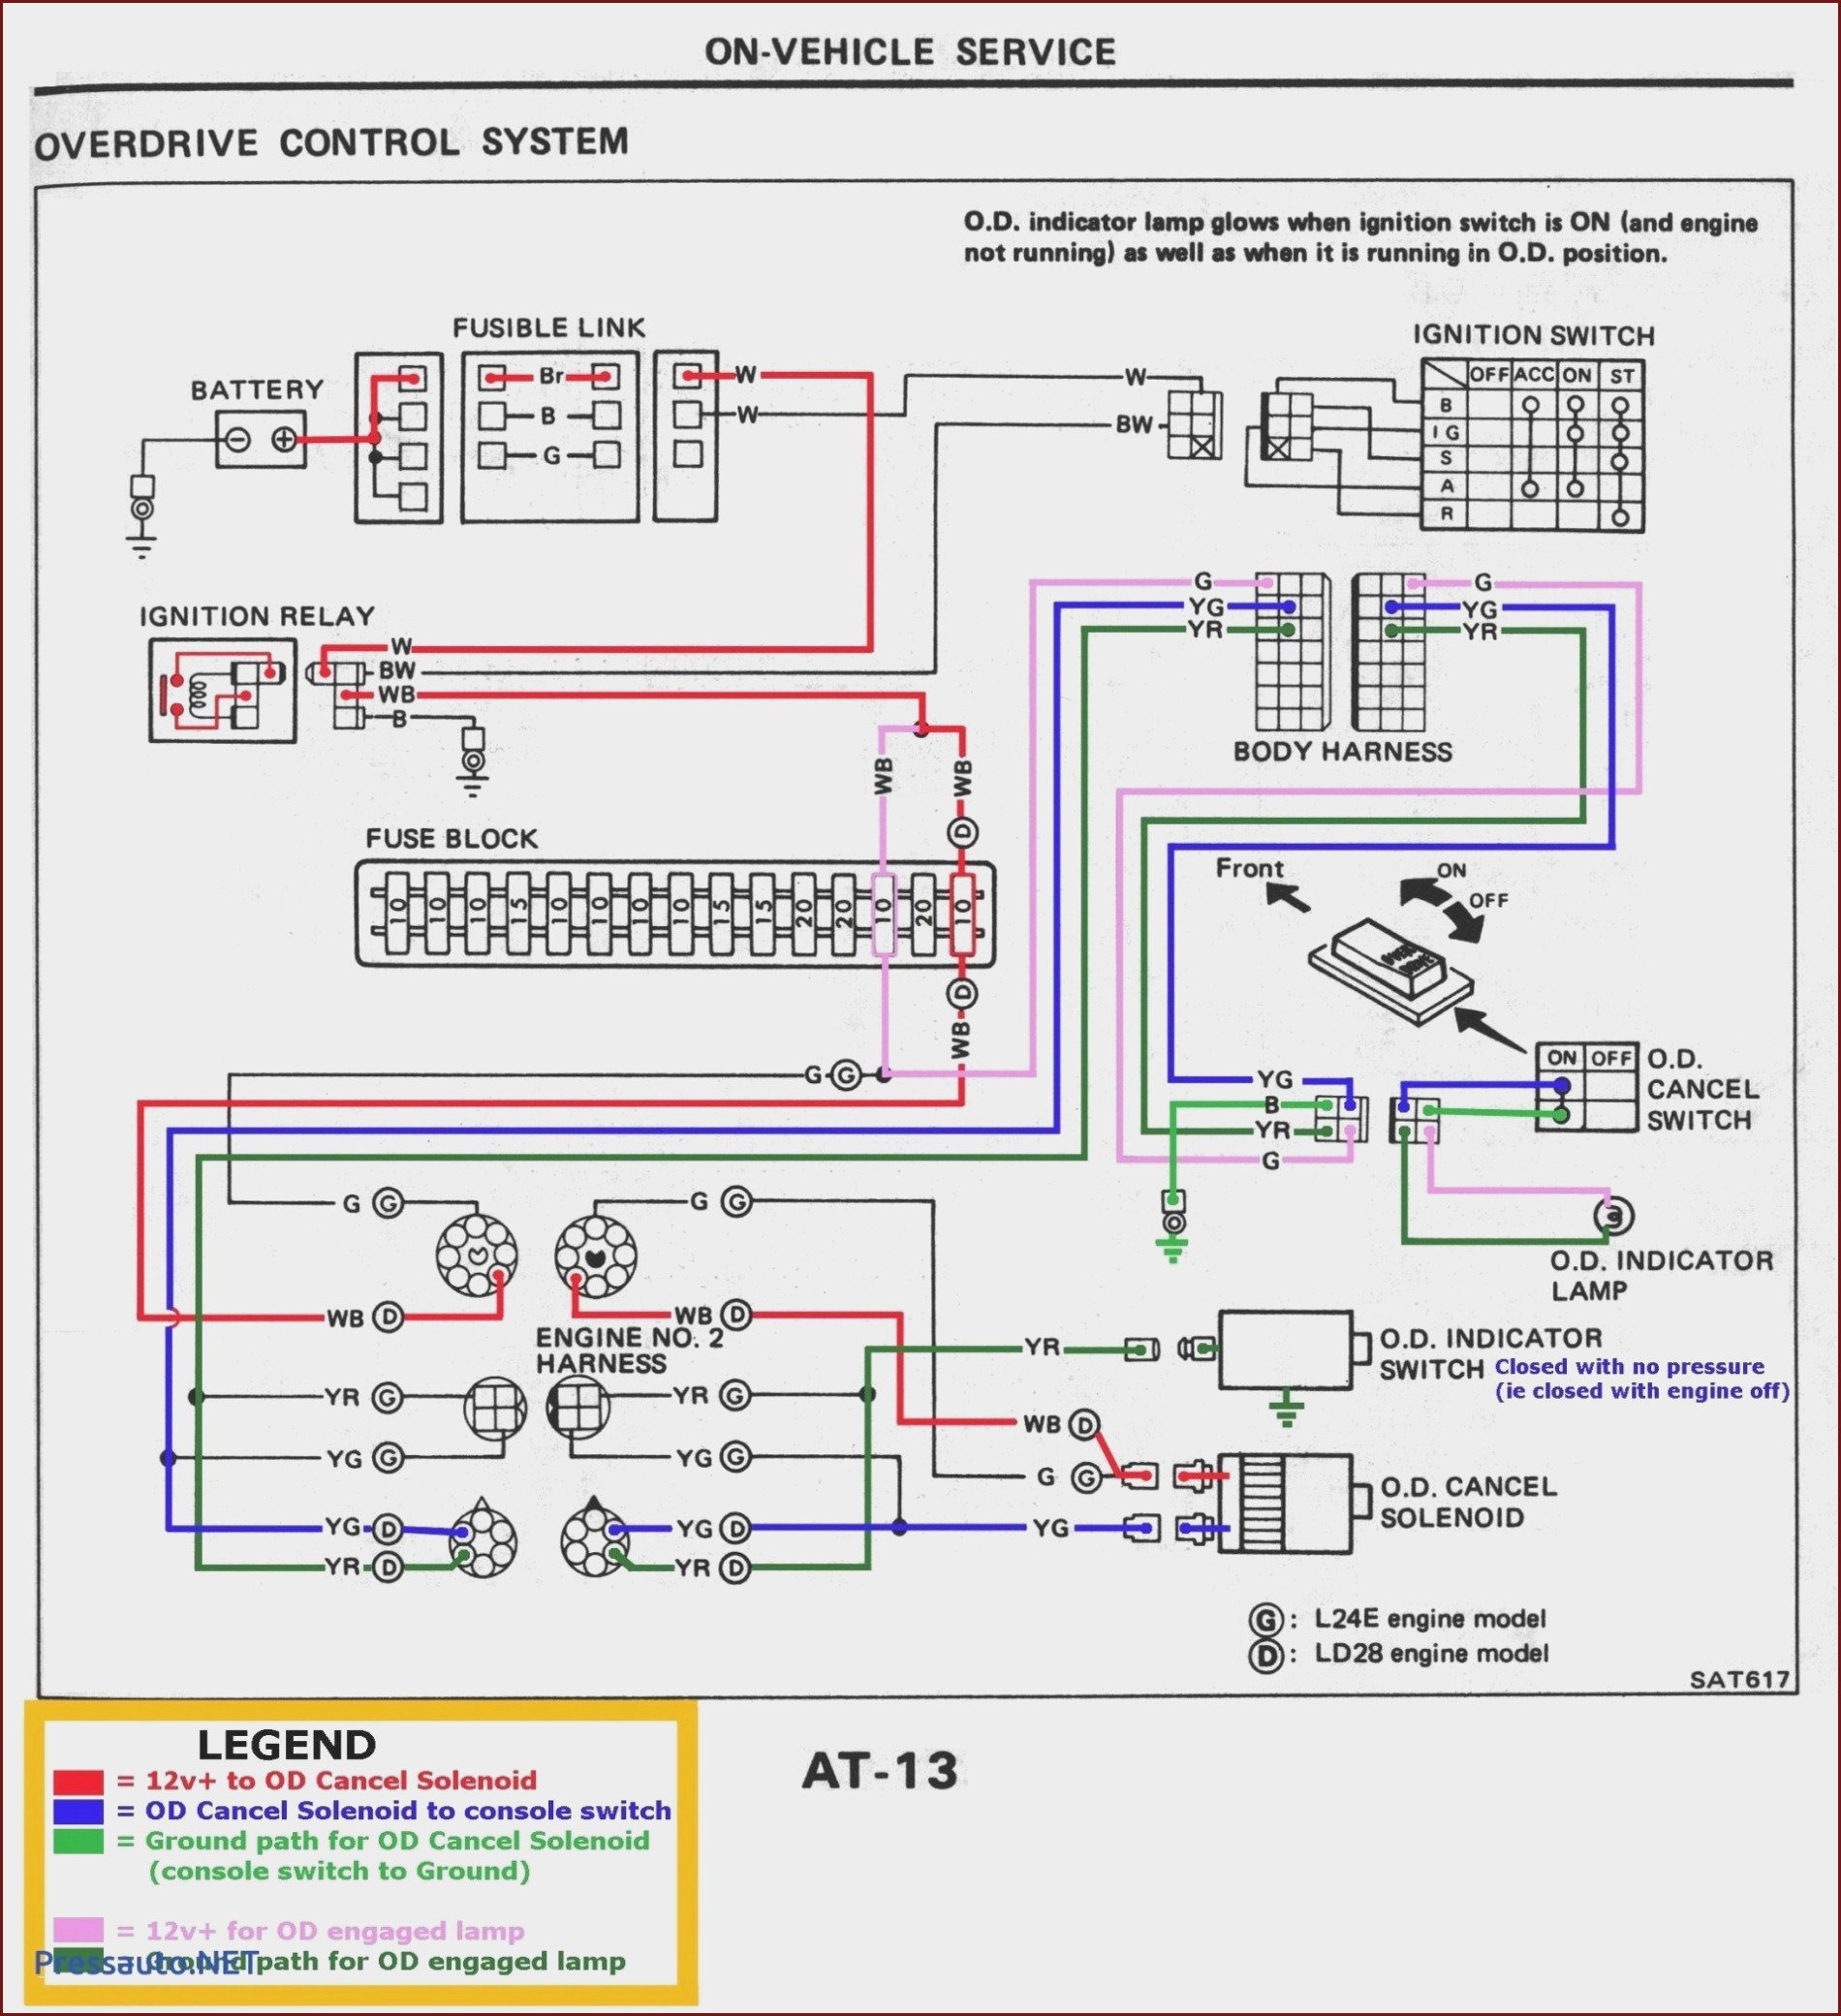 Ford Focus Engine Diagram 2001 ford F150 Trailer Wiring Diagram at Manuals Library Of Ford Focus Engine Diagram 2001